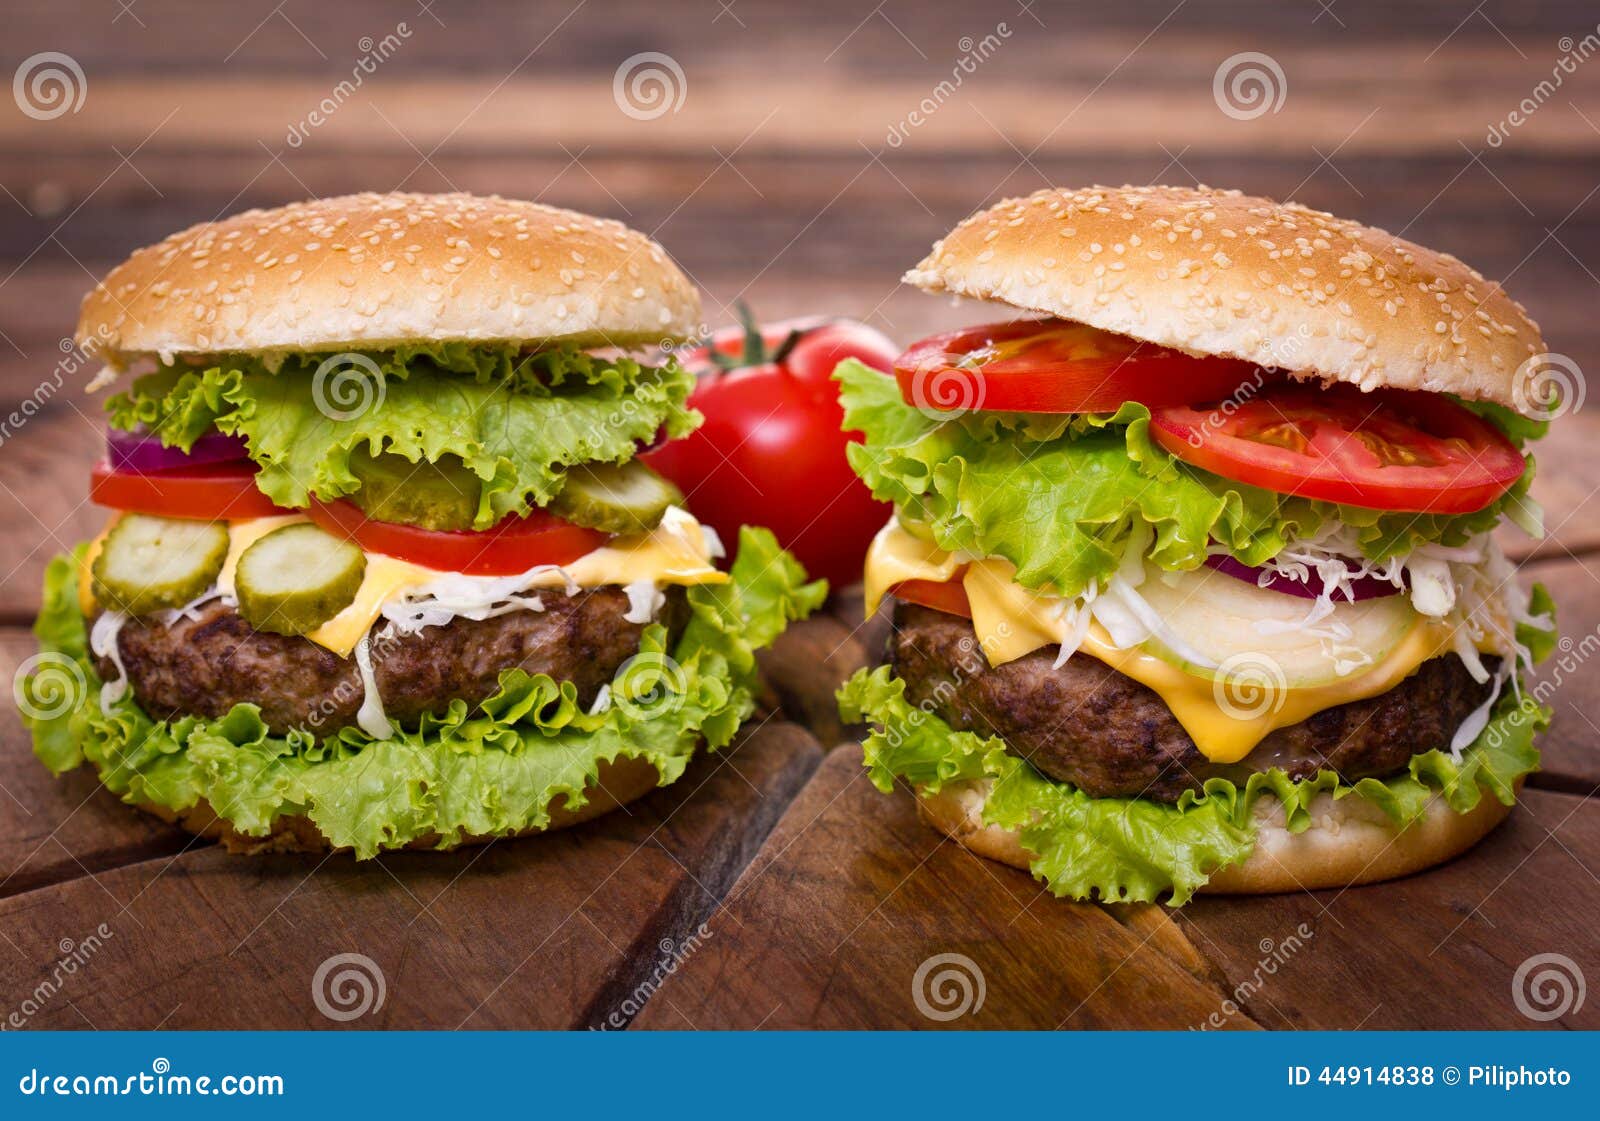 4,926 Fresh Hamburgers - Free & Royalty-Free Stock Photos from Dreamstime